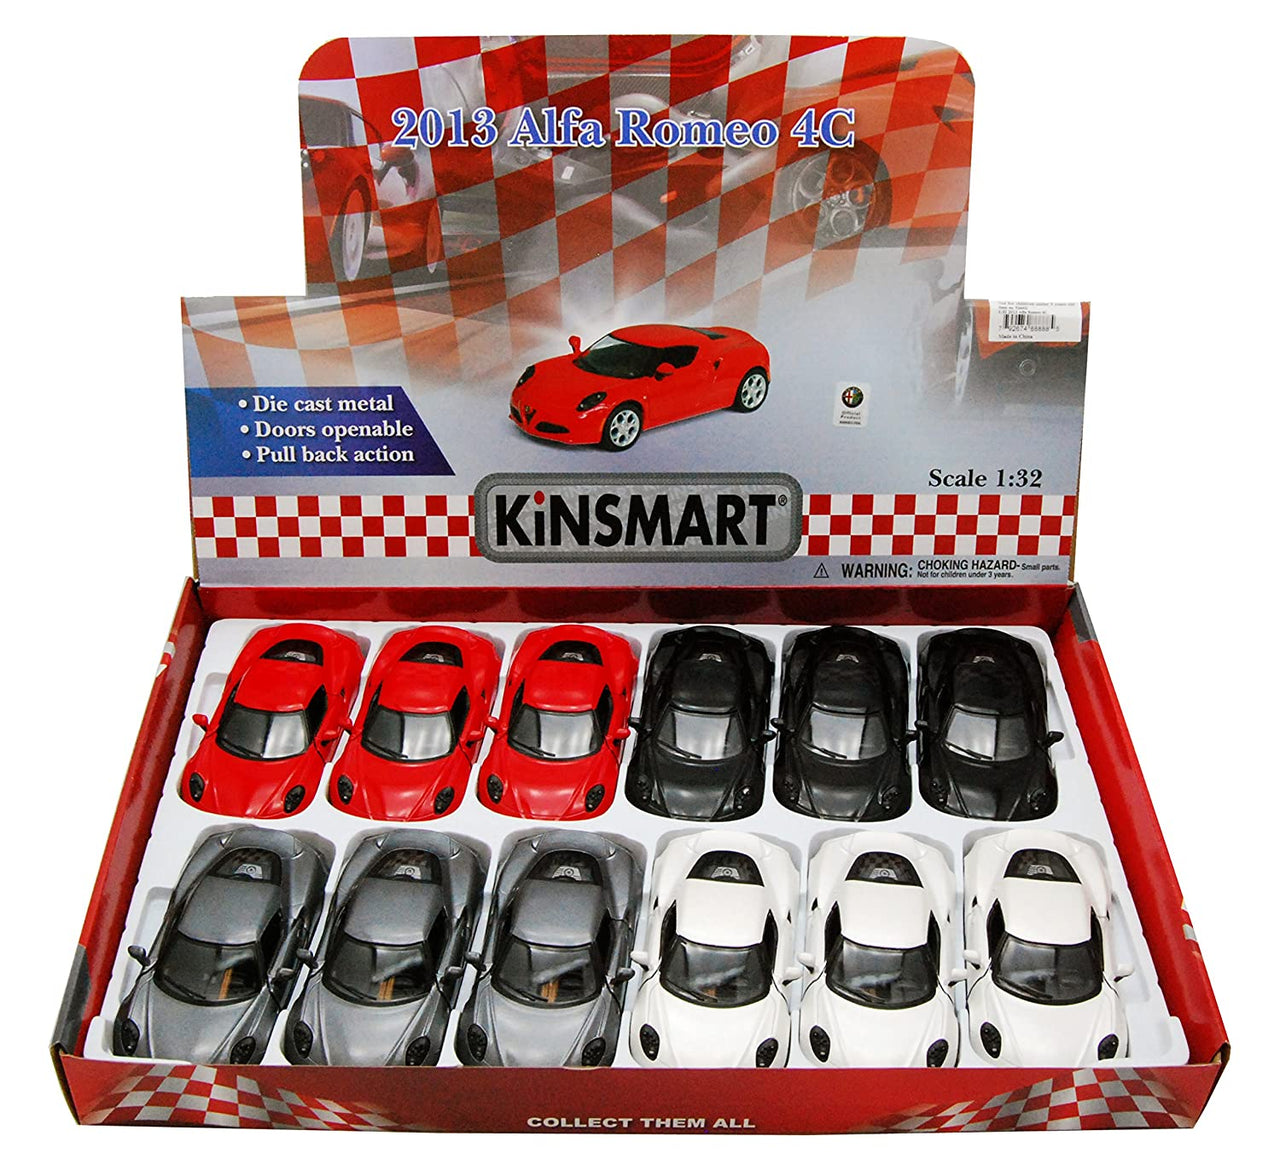 kinsmart 2013 alfa romeo 4c diecast model car